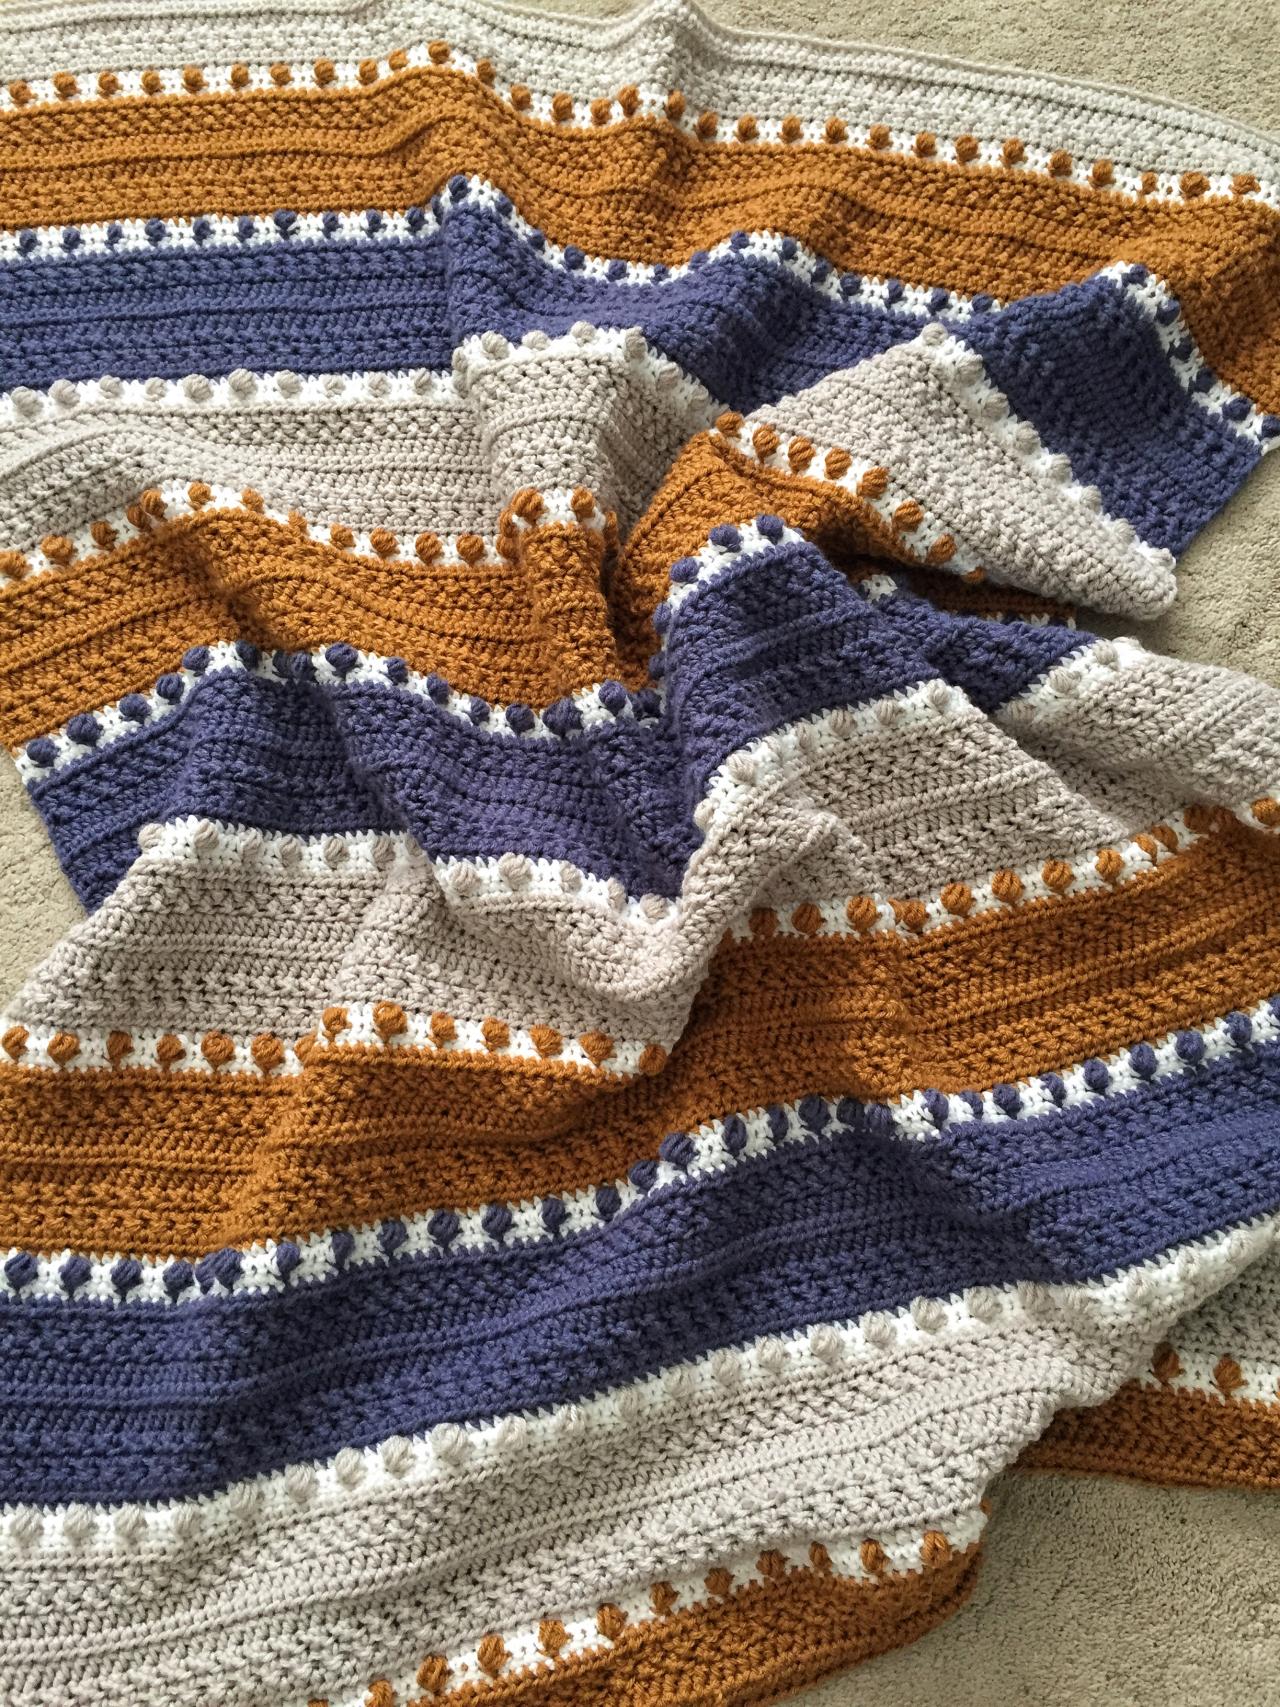 Crochet Pattern - For The Love Of Texture Afghan. Crochet Heirloom Blanket. Crochet Stitches. Crochet Texture. Crochet Blanket Pattern.